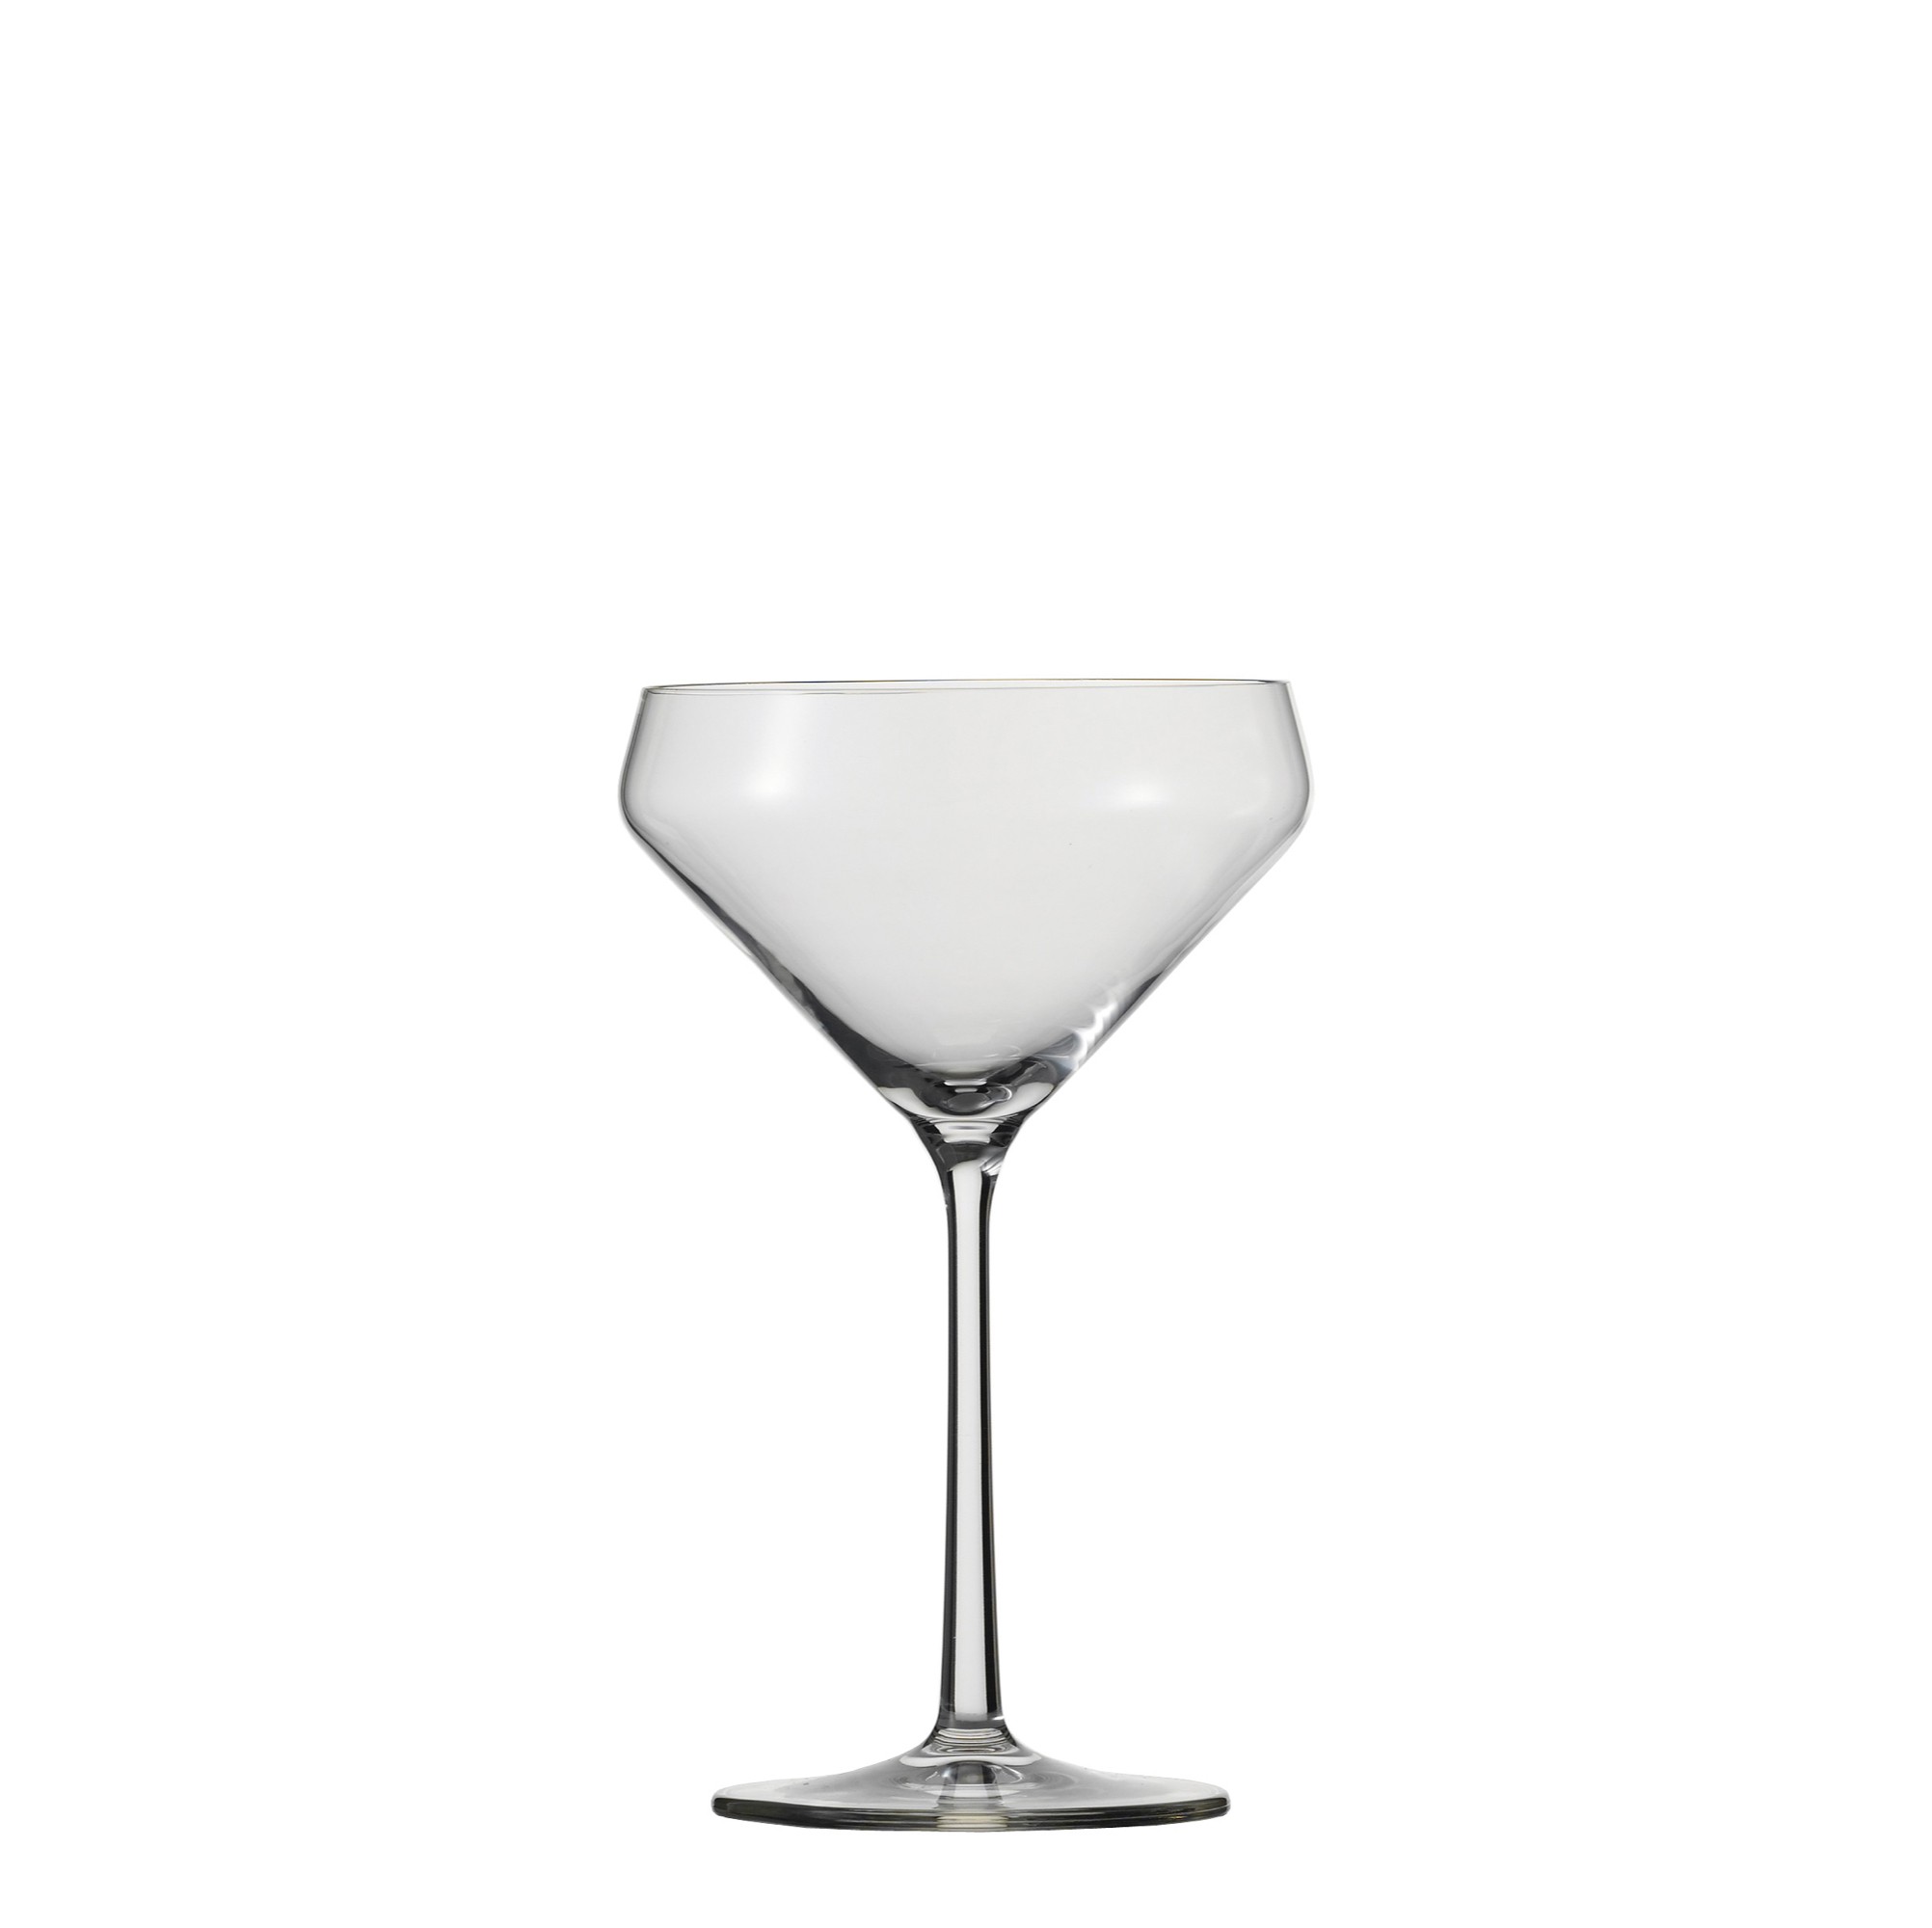 Schott Zwiesel Pure Martini (86) 11.6oz - Set of 6